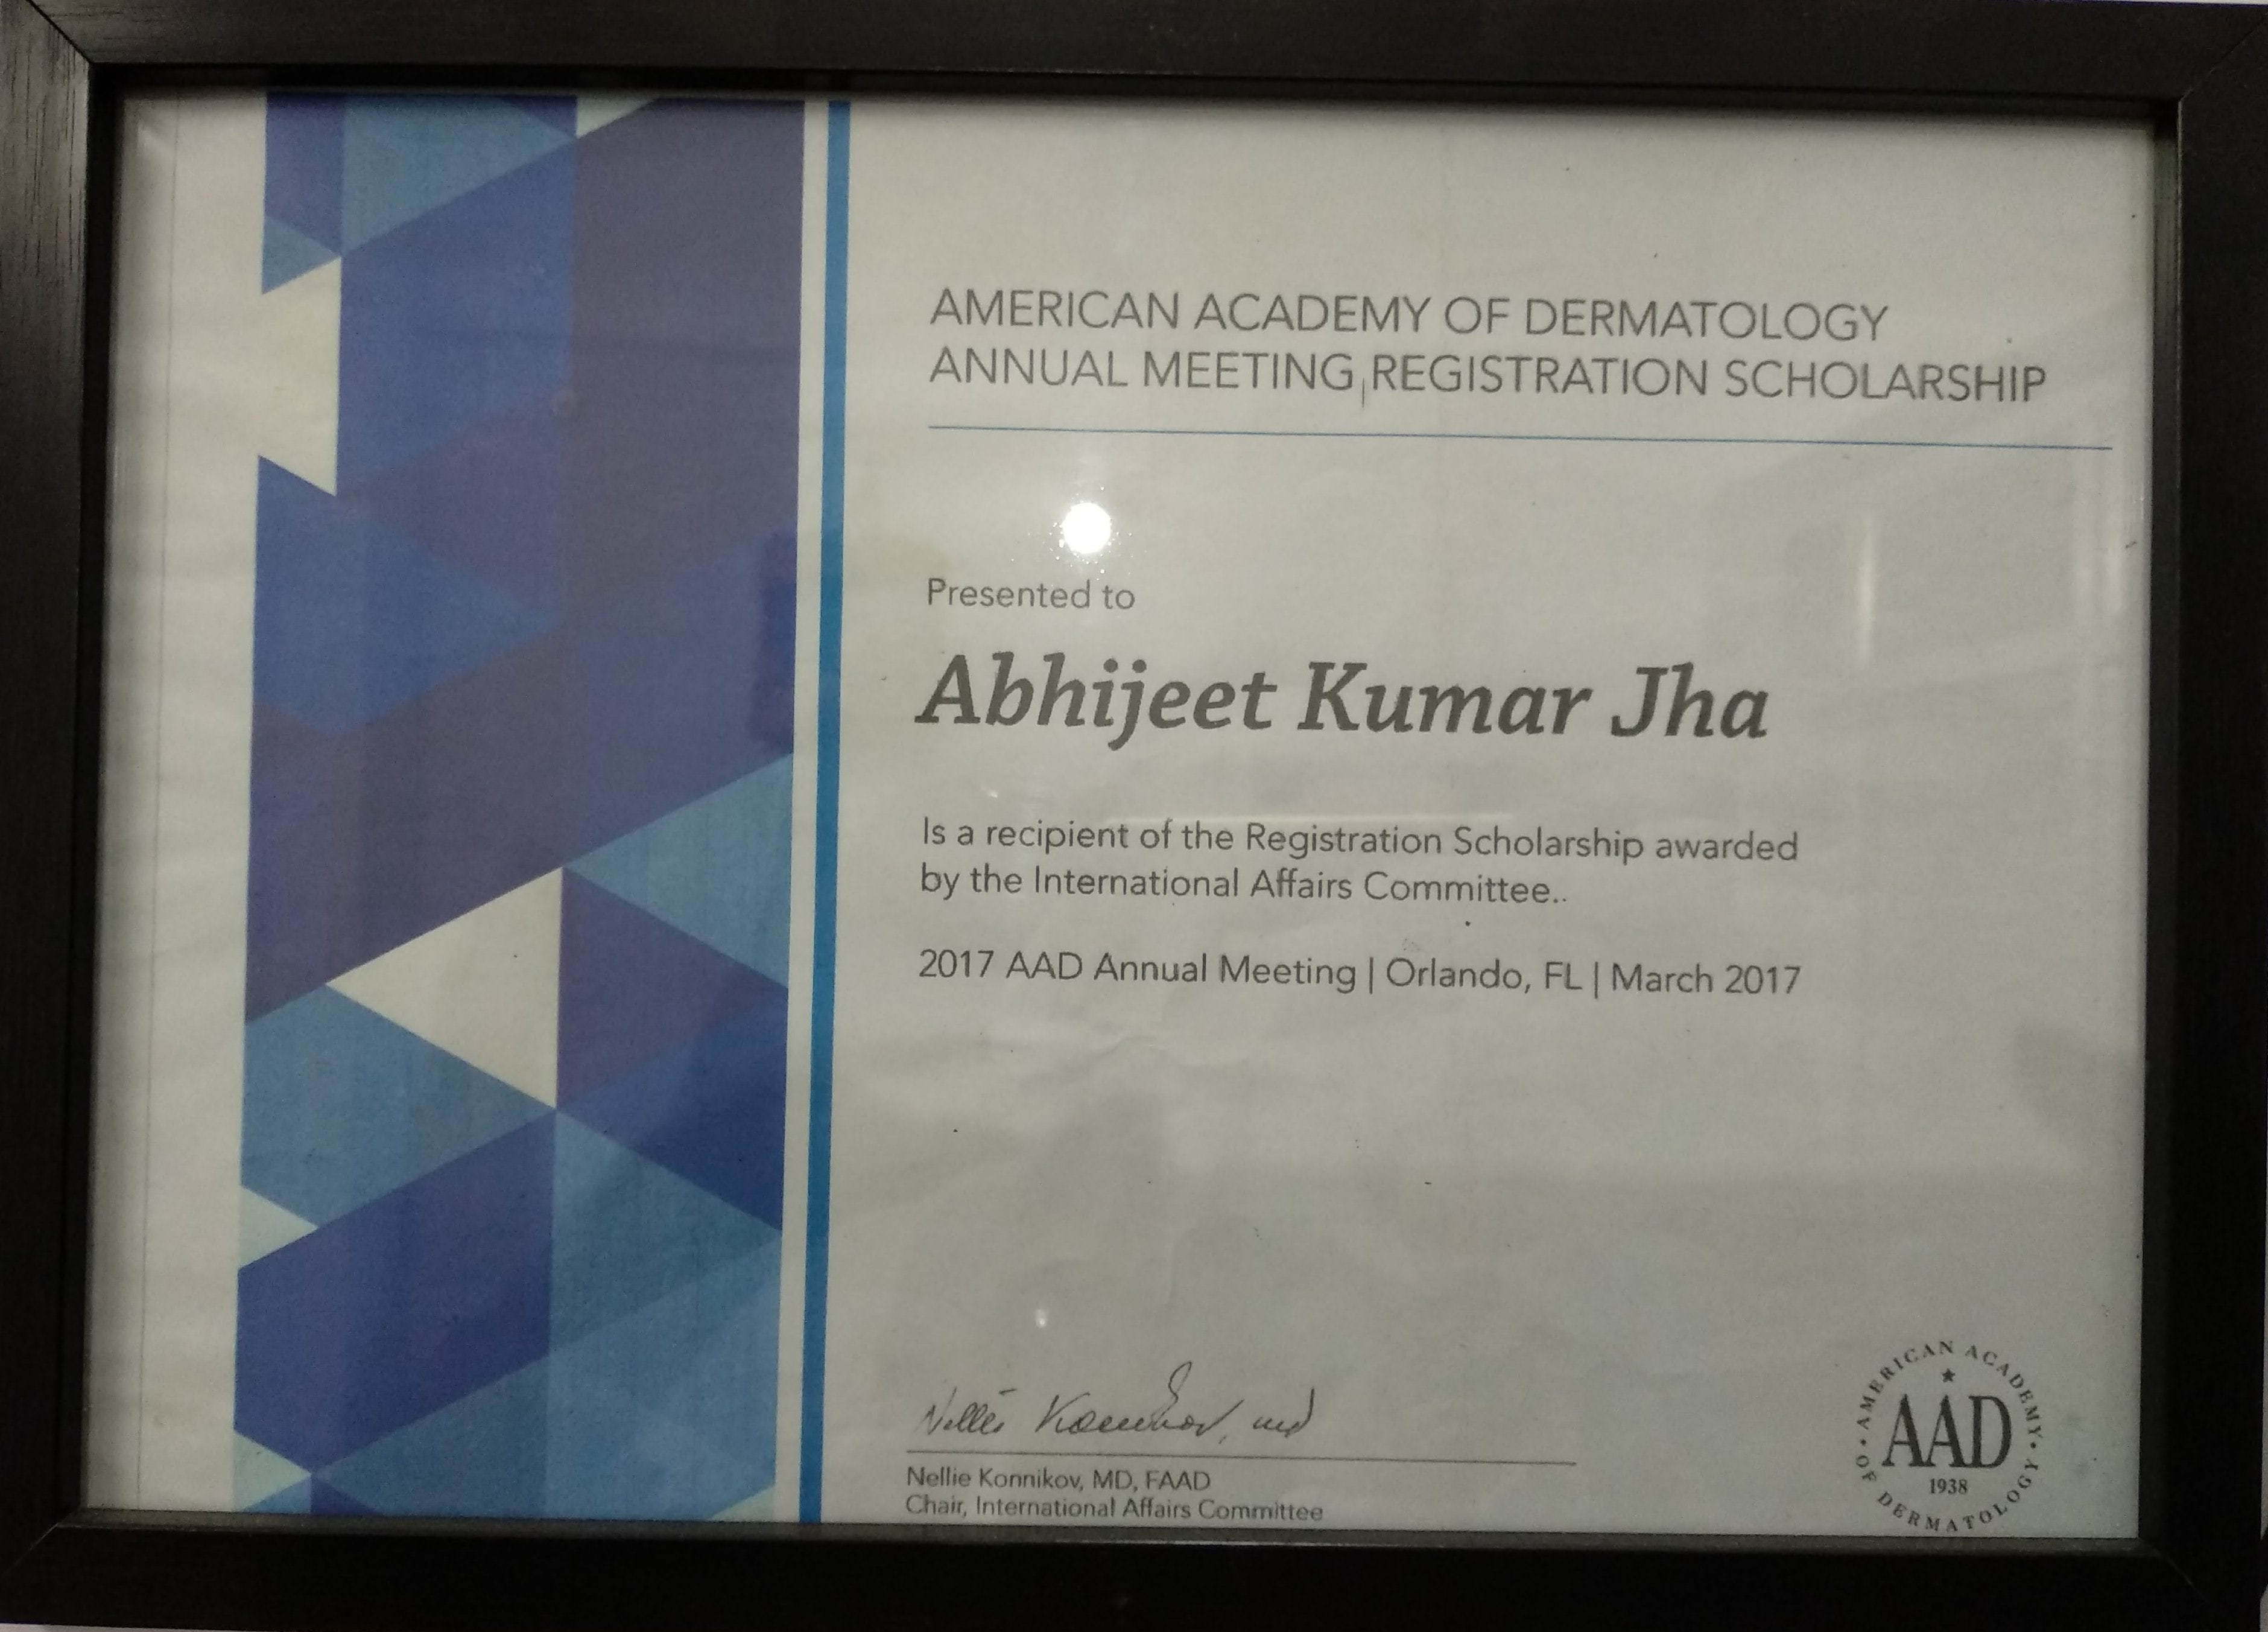 Dr Abhijeet Kumar Jha